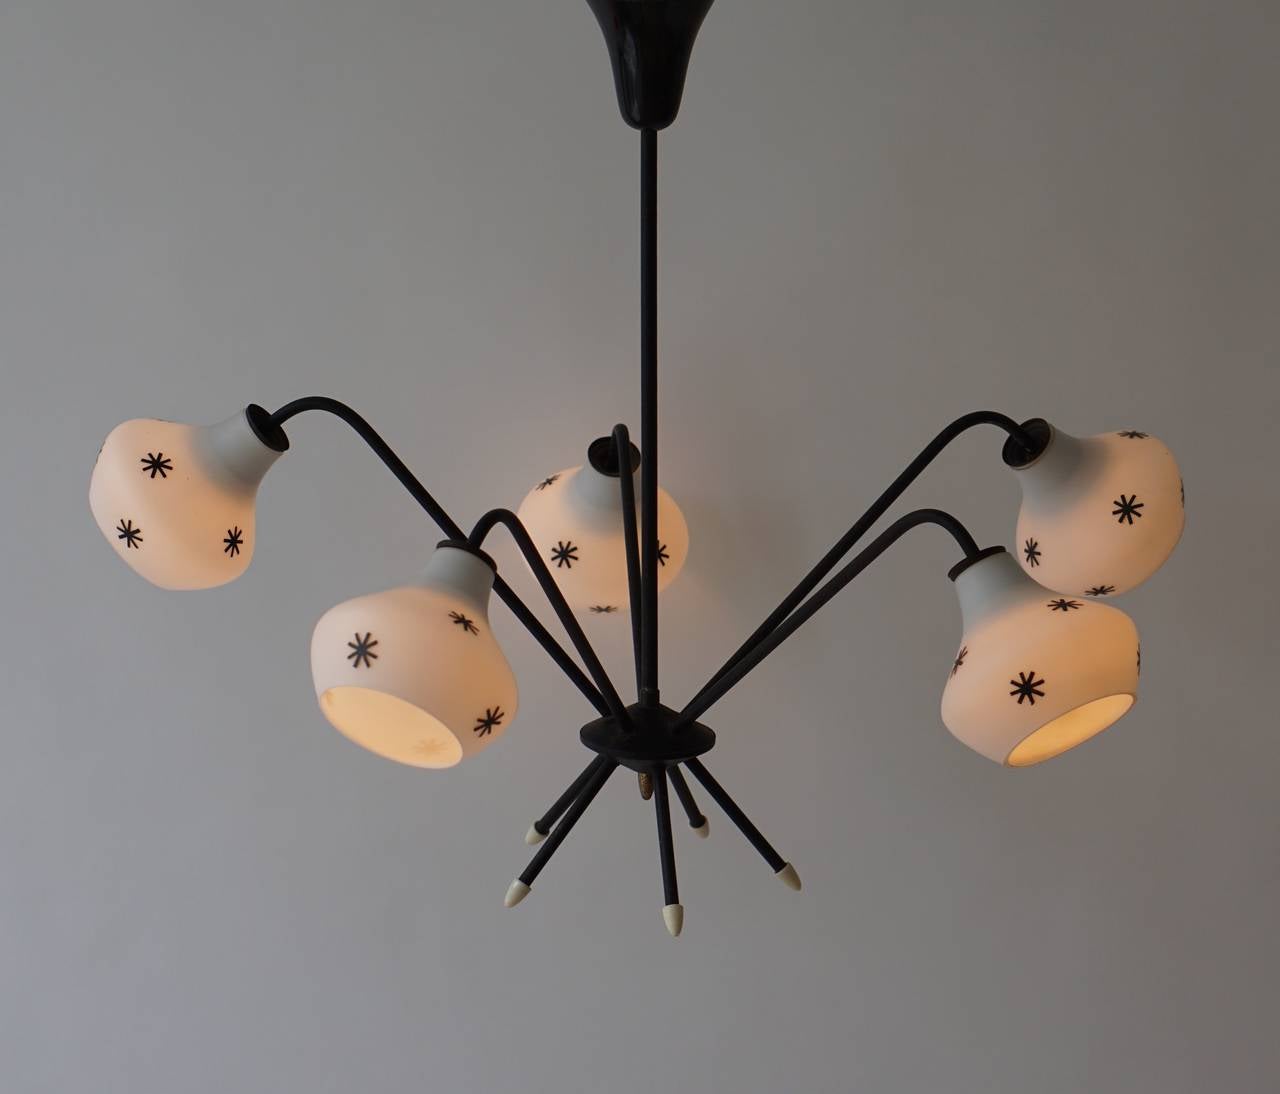 Italian 1950s chandelier with 5 Glass shades.
Light uses 5 E14 bulbs, Max wattage 40 each.